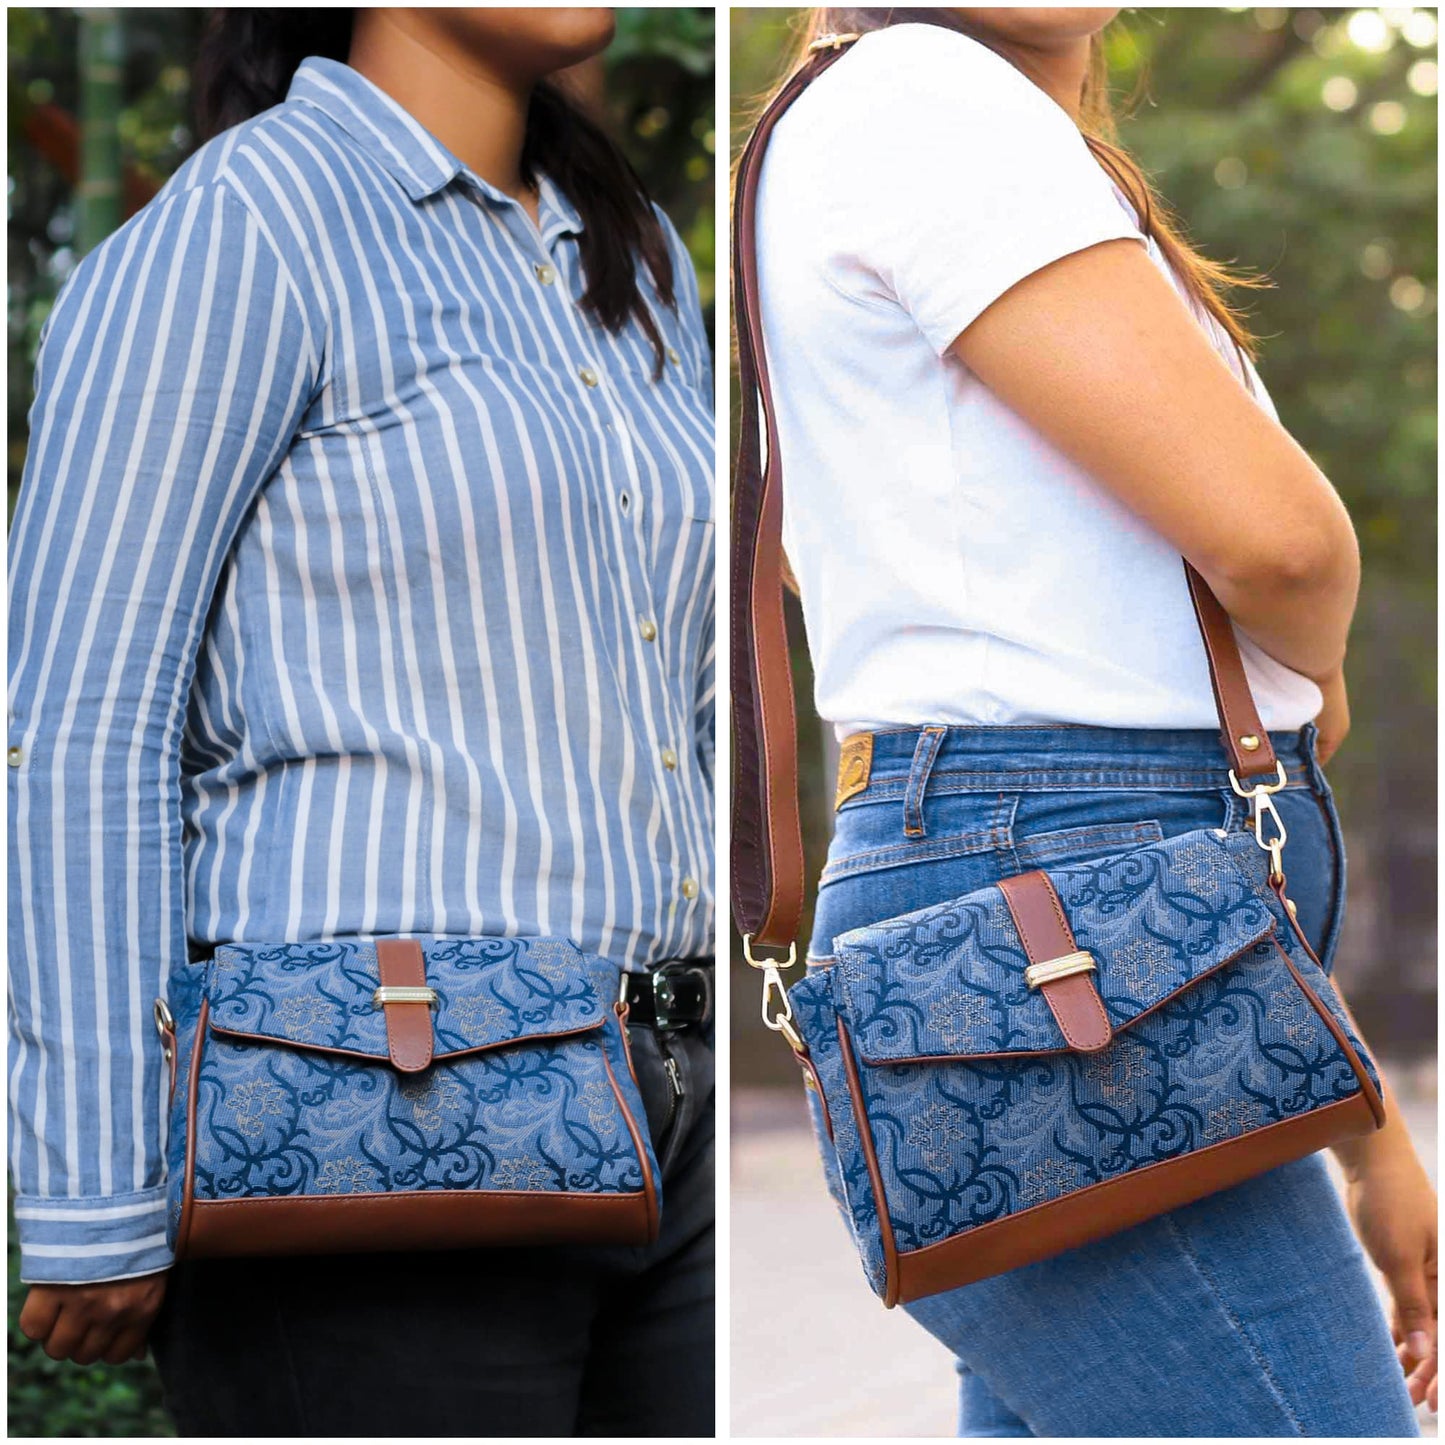 THE CLOWNFISH Odelina Series Printed Handicraft Fabric Handbag for Women Sling Bag Office Bag Ladies Shoulder Bag with Snap Flap Closure & Shoulder Belt Tote For Women (Steel Blue)